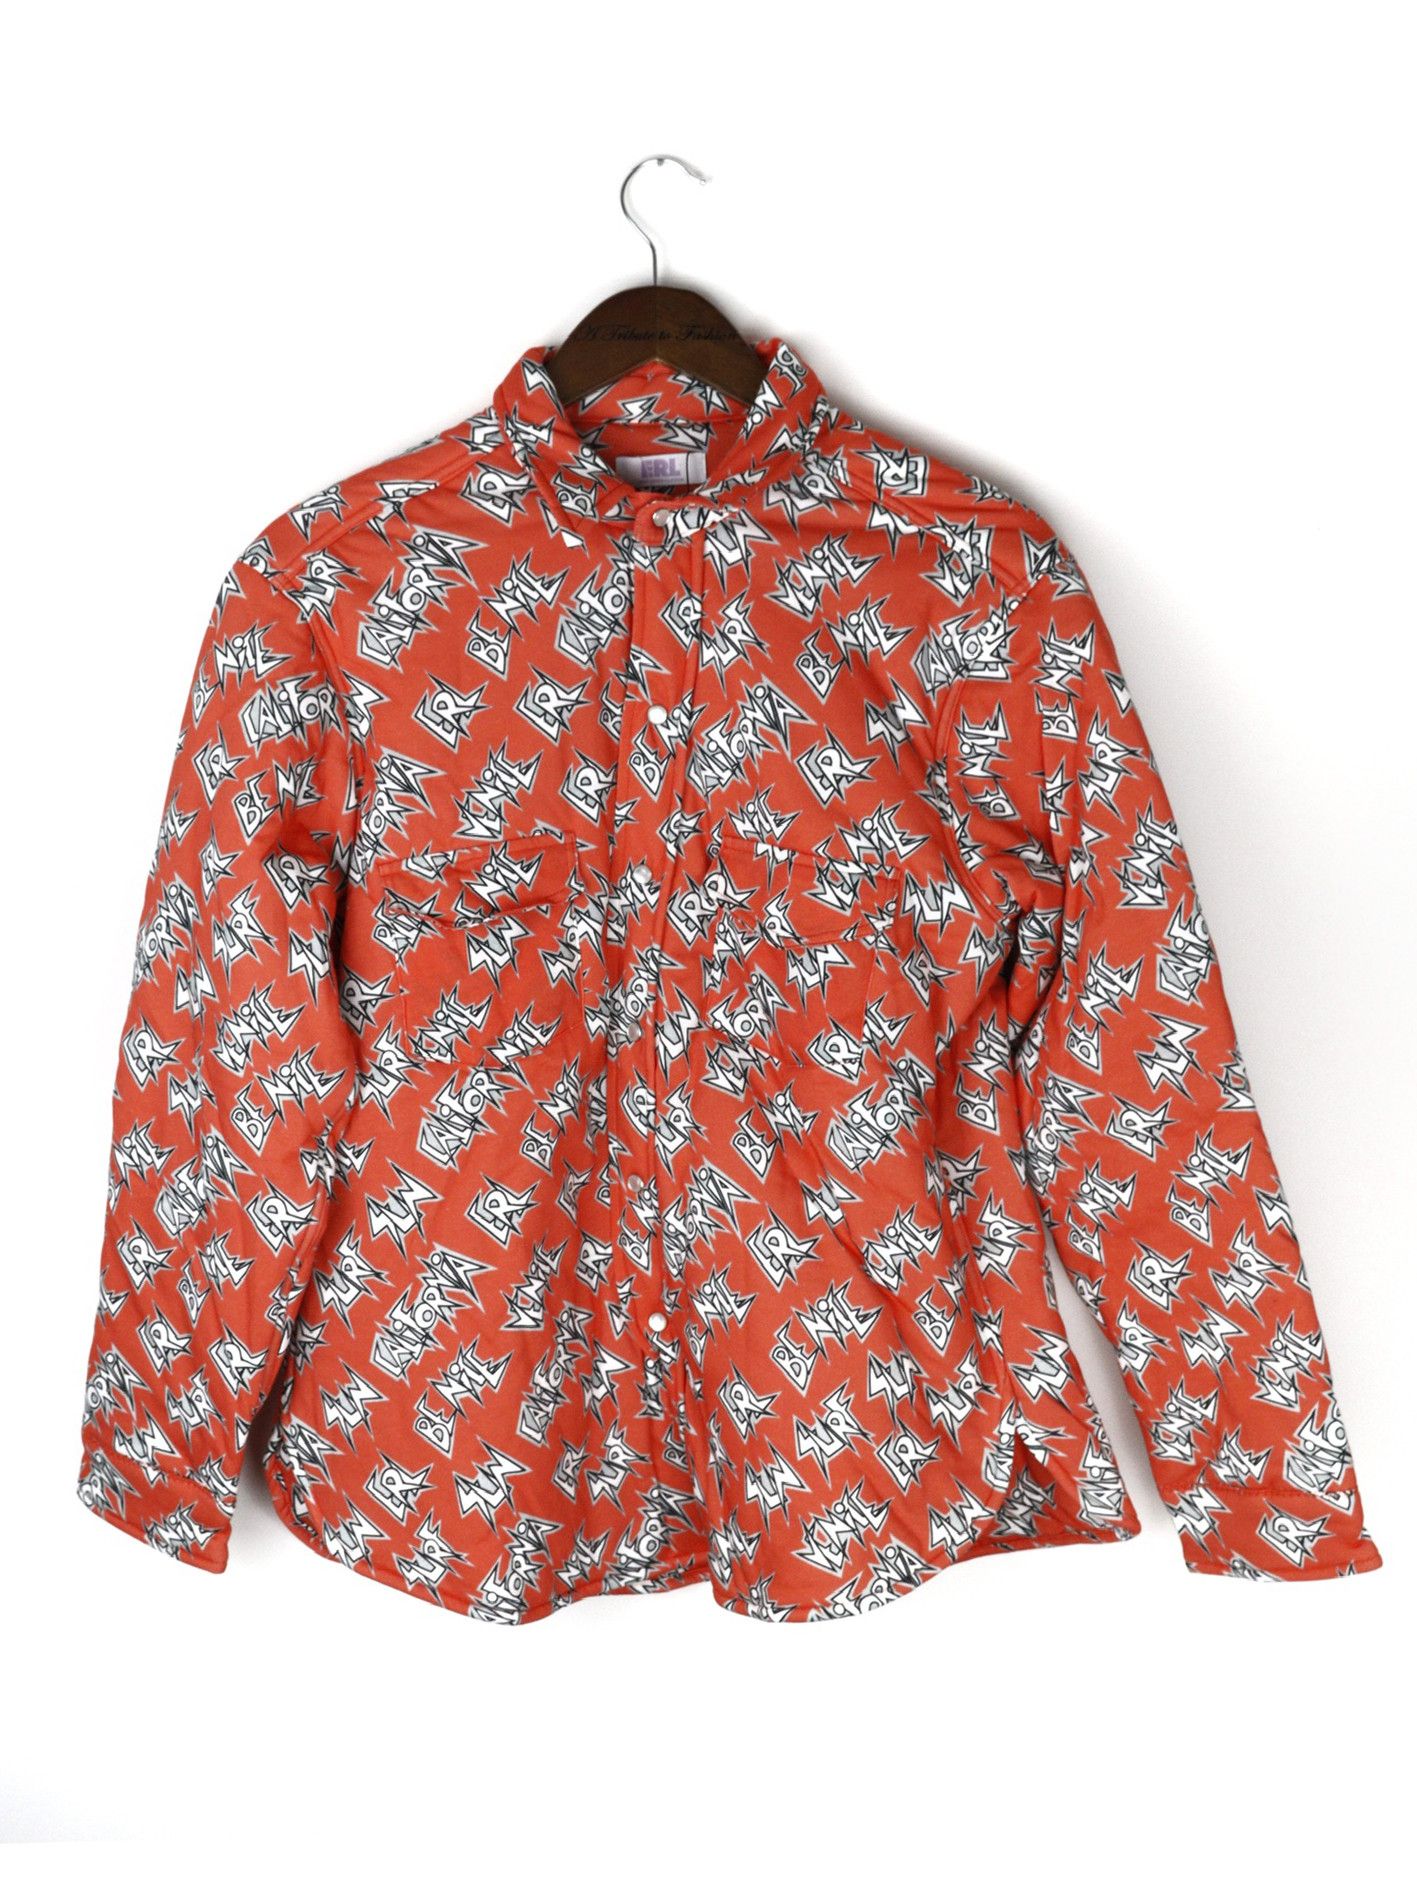 ERL "Be Nice' Printed OVERSHIRT jacket Cotton Padded Shirt​  ​Size: XXL